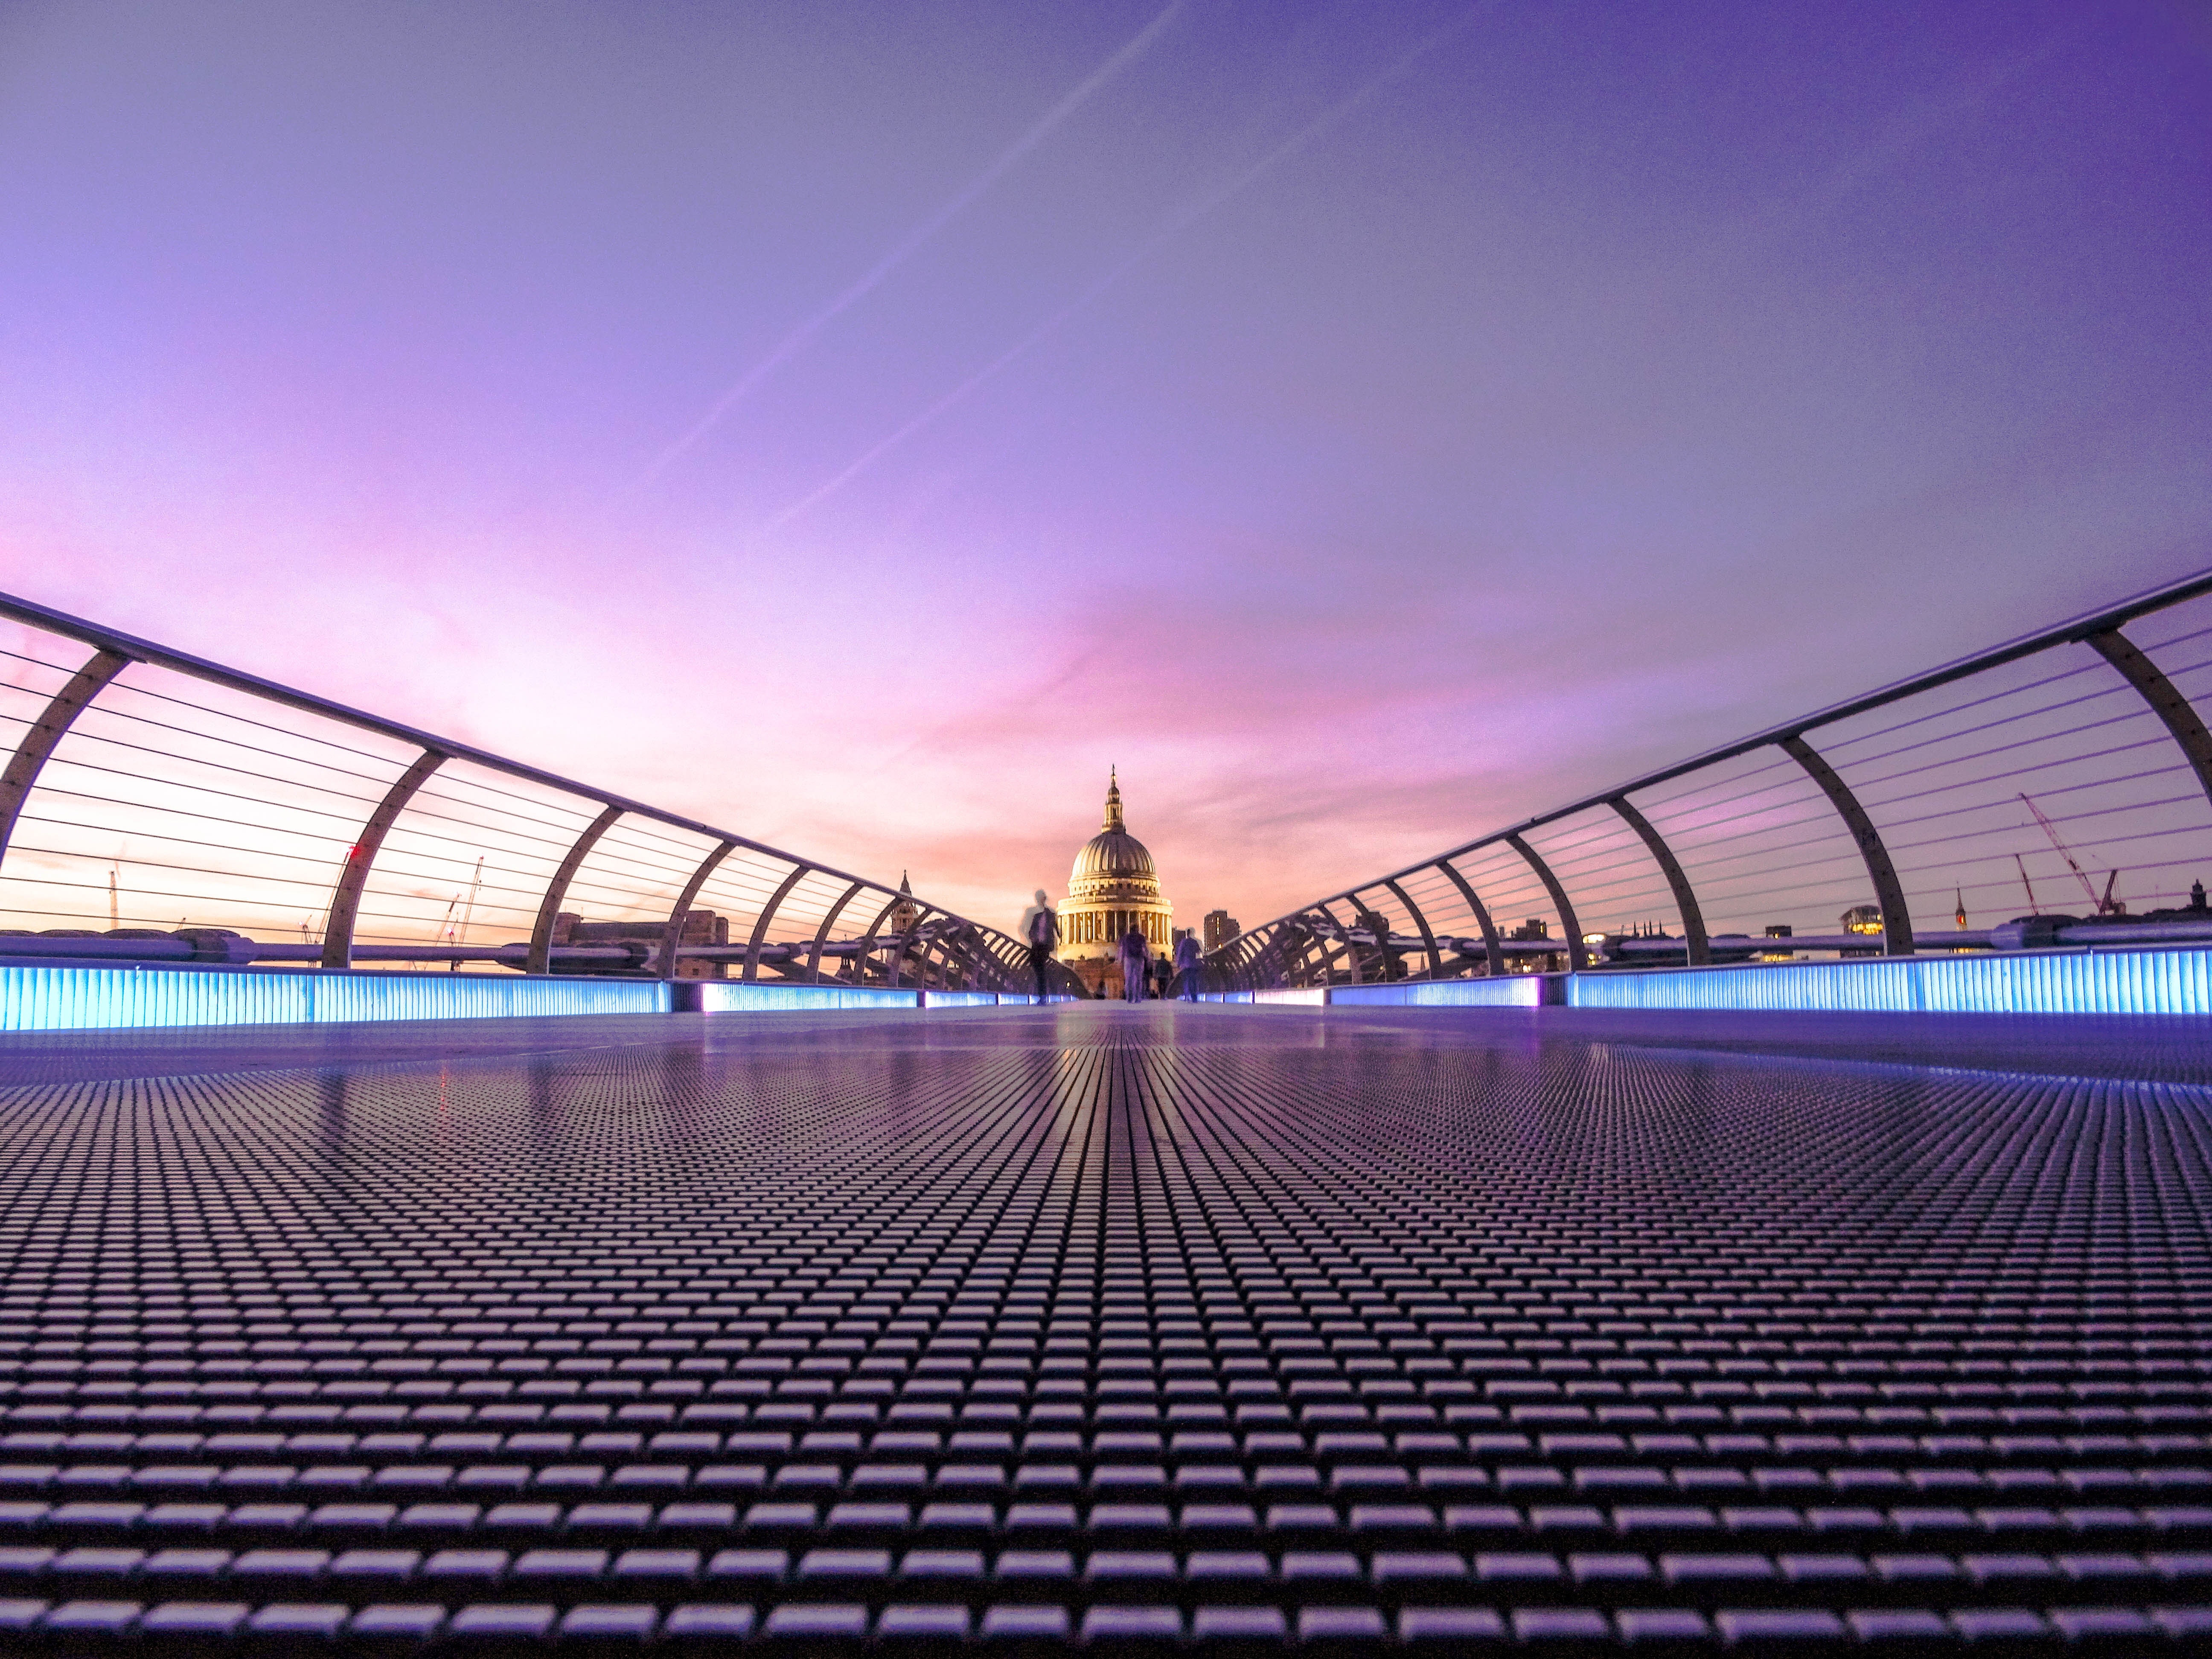 Millennium Bridge, London. Photo by James Padolsey on Unsplash